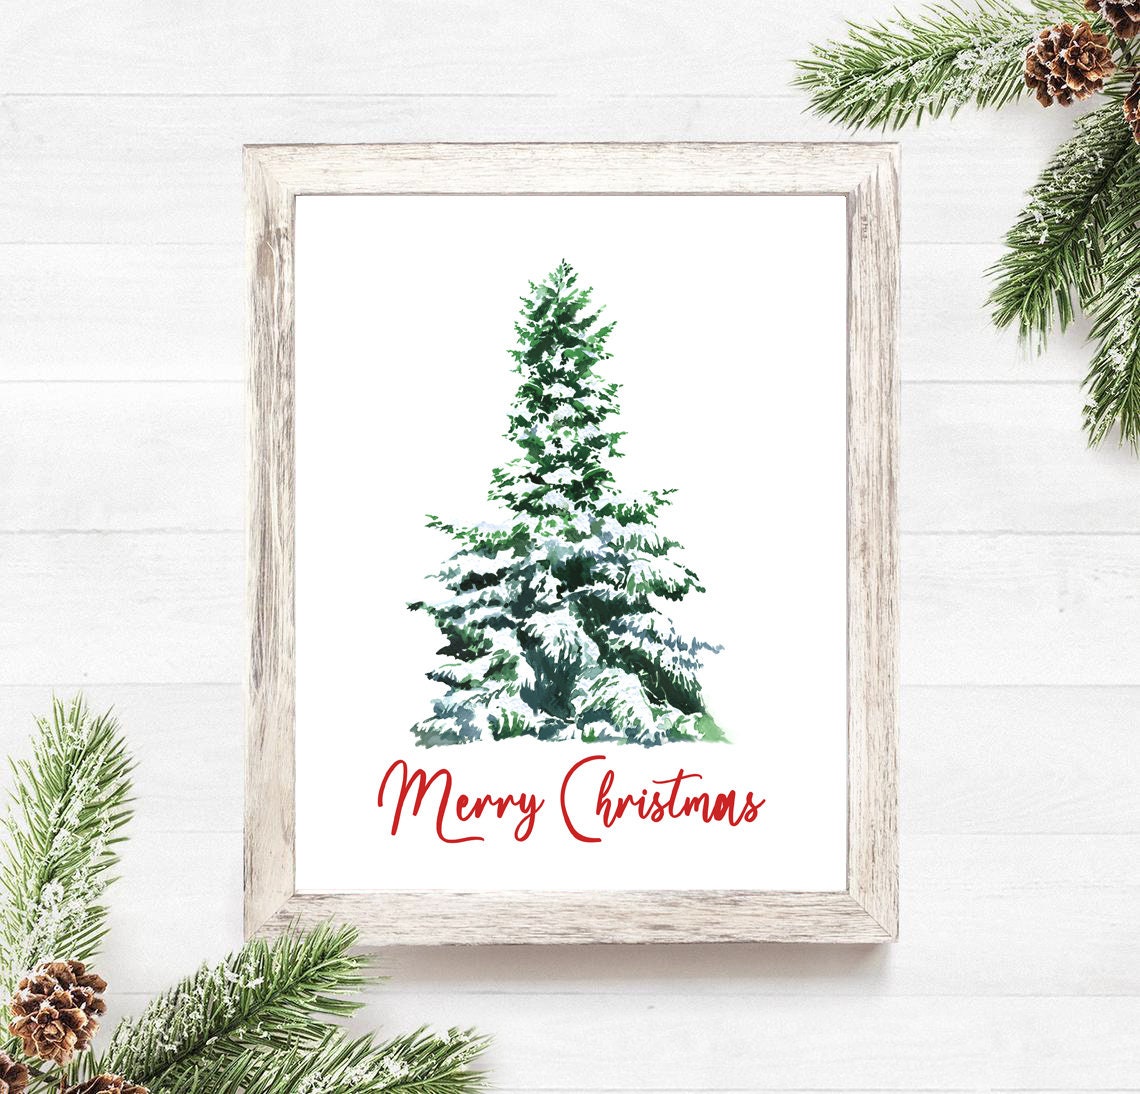 Pine tree merry christmast wood sign Print printable Wall | Etsy